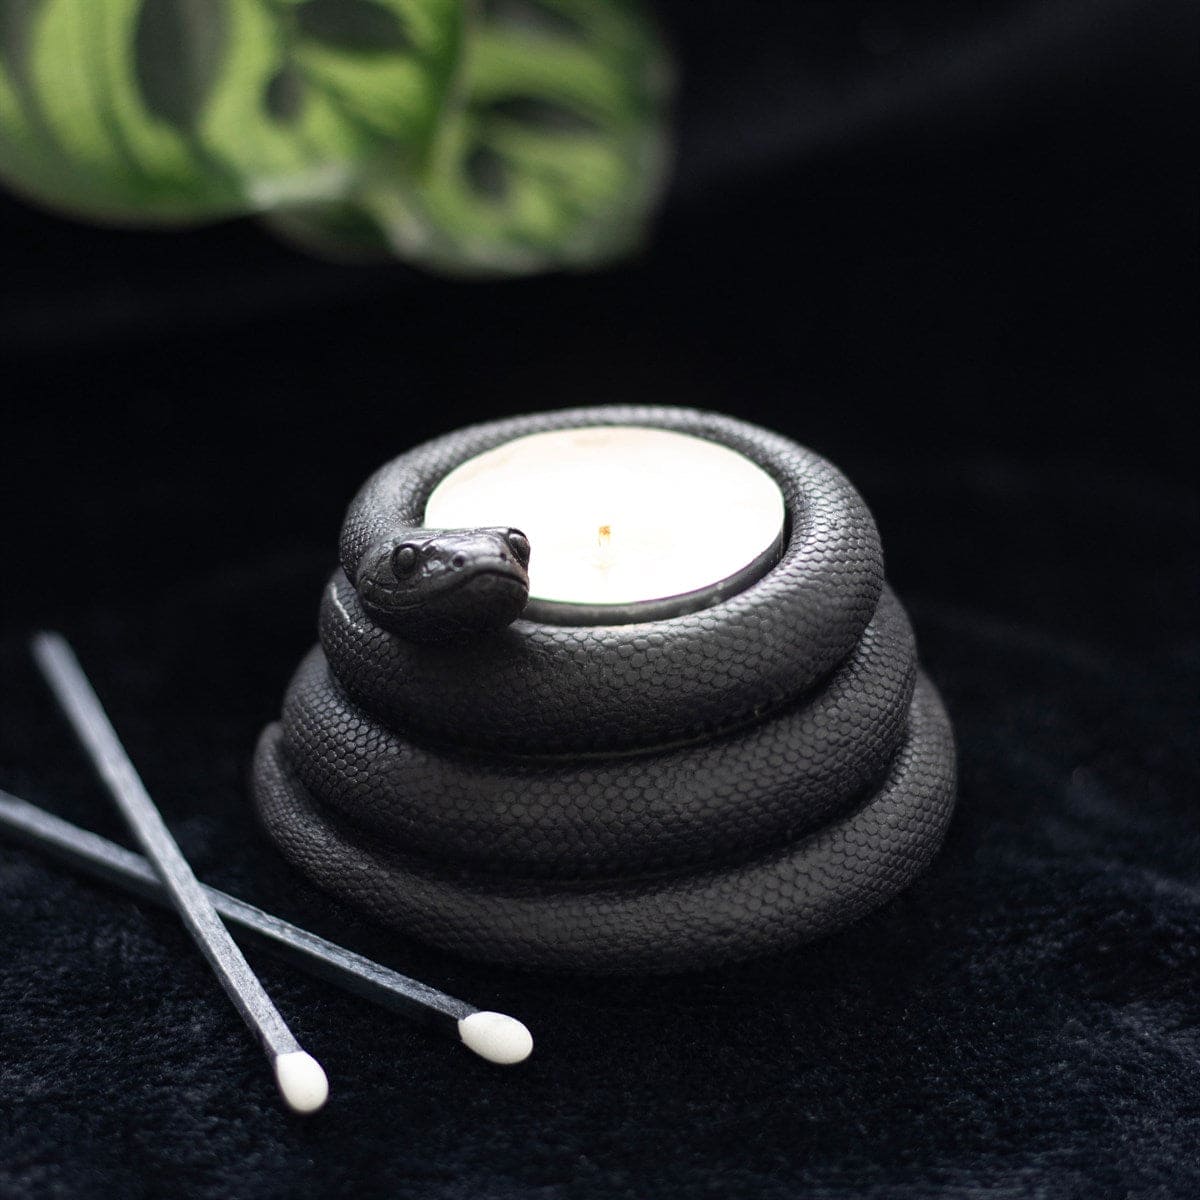 Black Coiled Snake Design Tealight Candle Holder - Tea Light Holder by Spirit of equinox